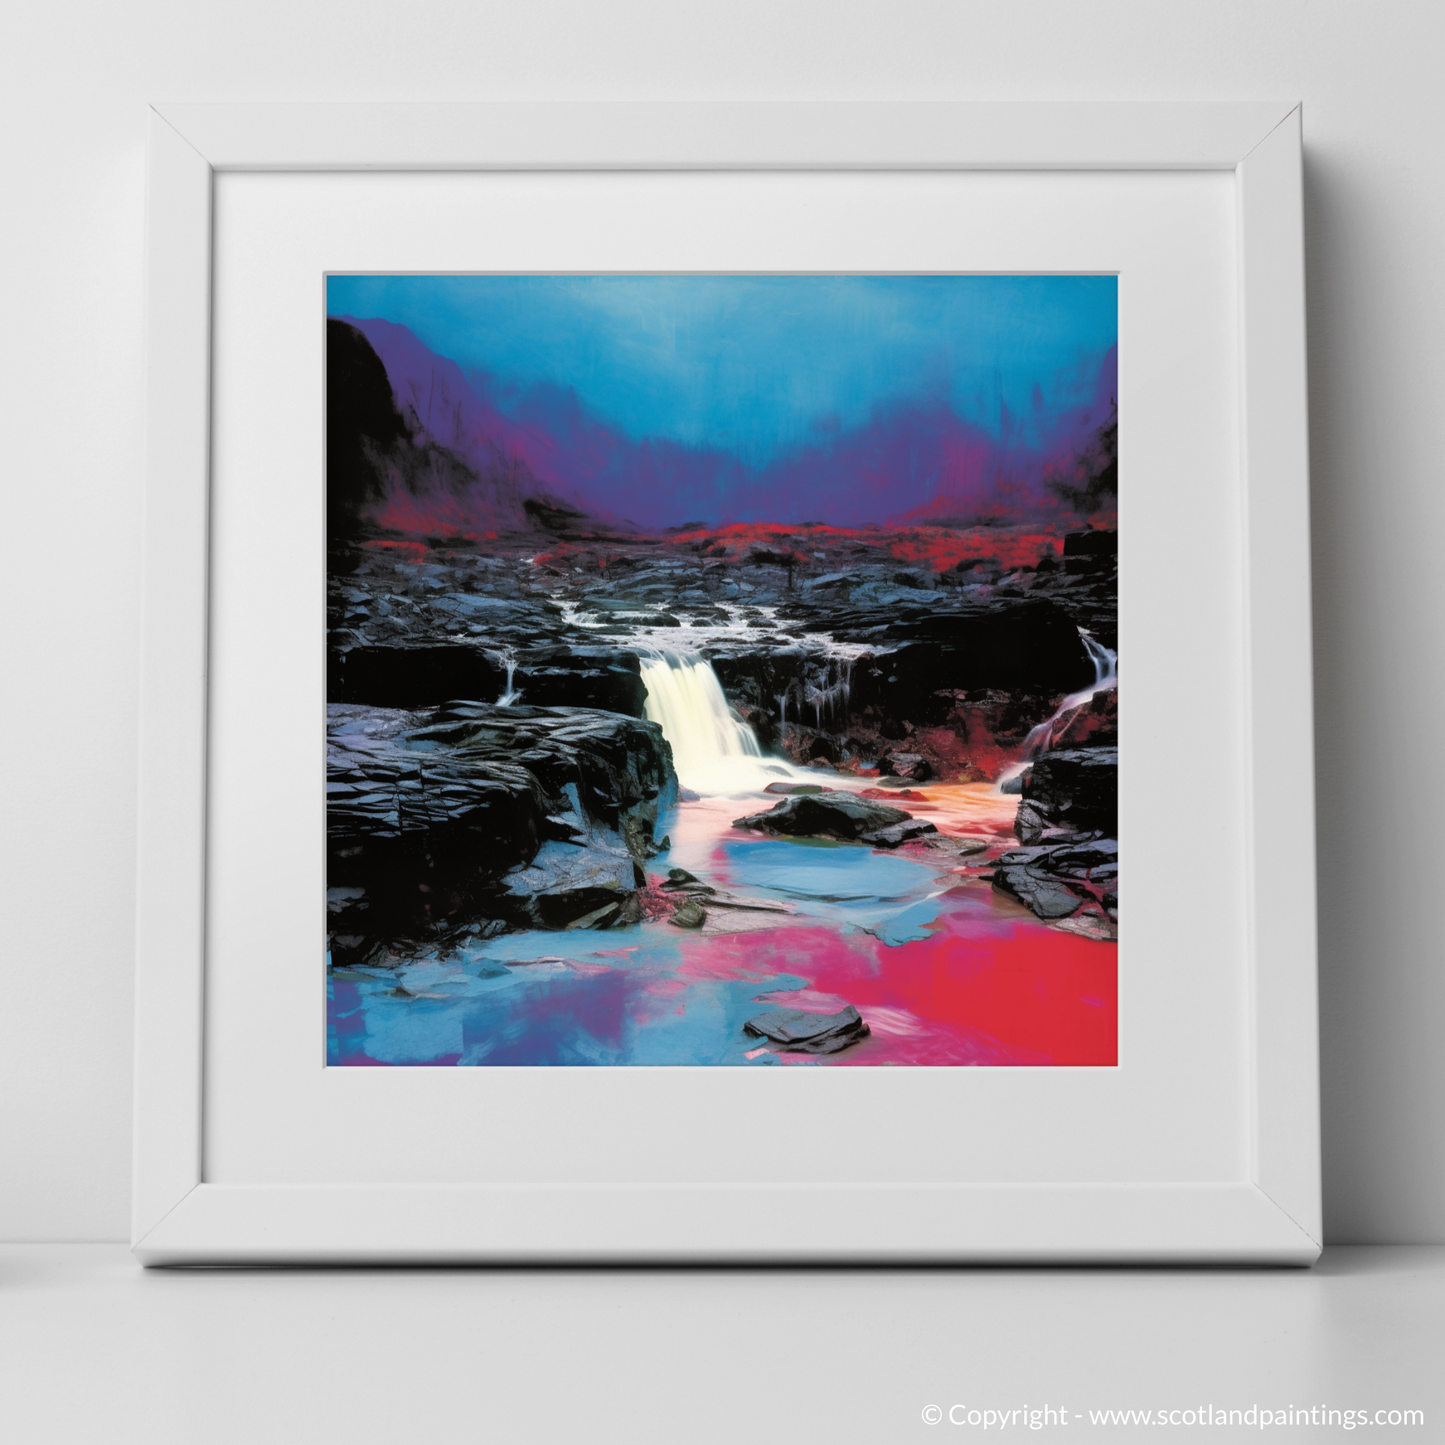 Dusk at the Isle of Skye Fairy Pools: A Pop Art Reverie